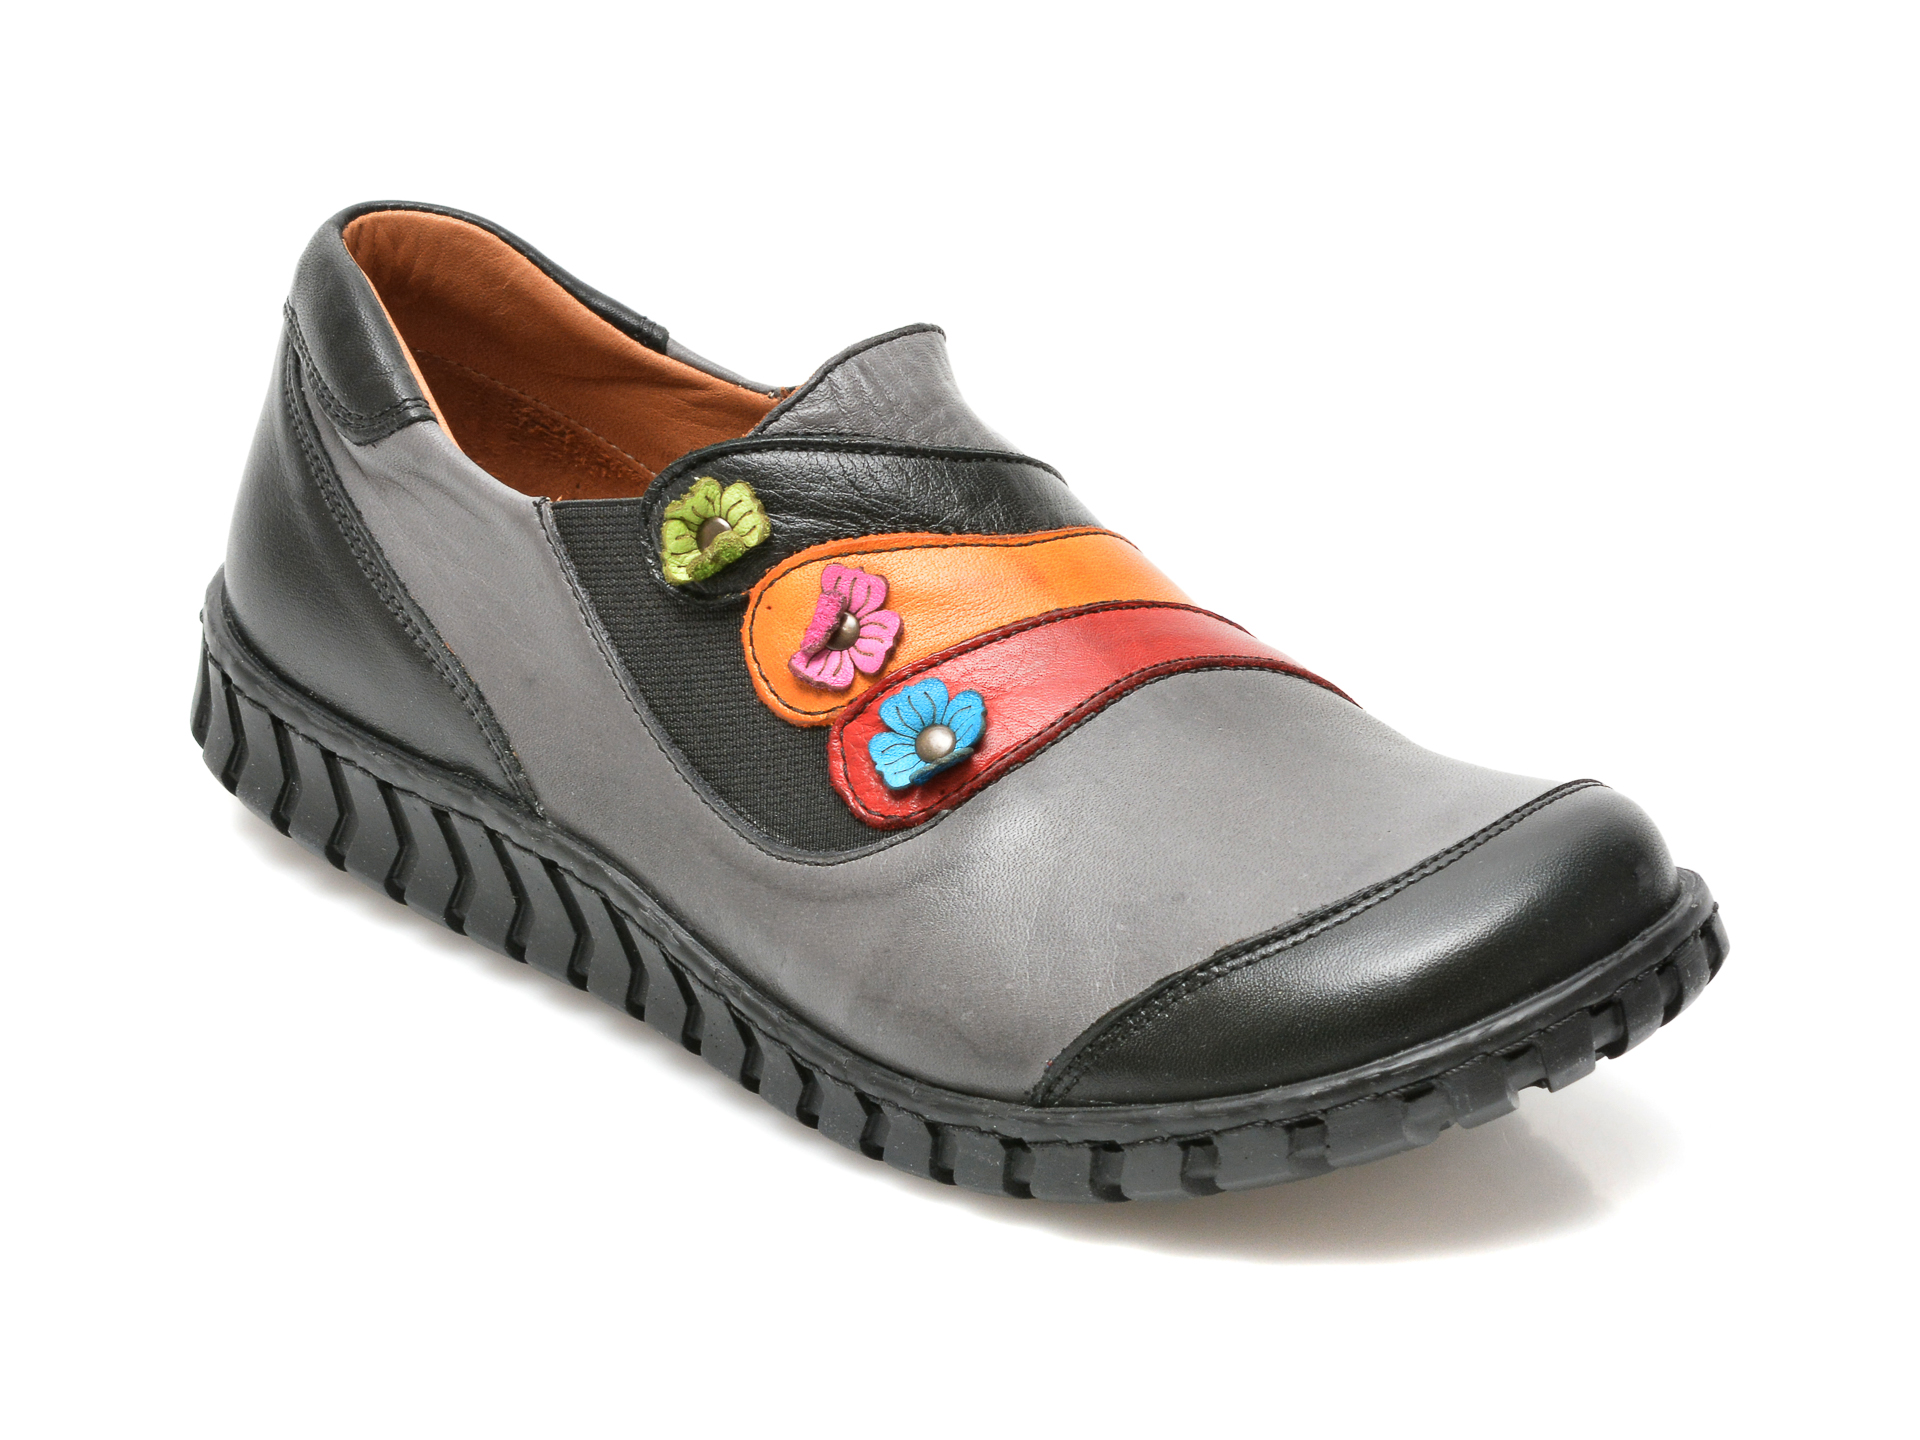 Pantofi Flavia Passini Multicolori, 3062, Din Piele Naturala